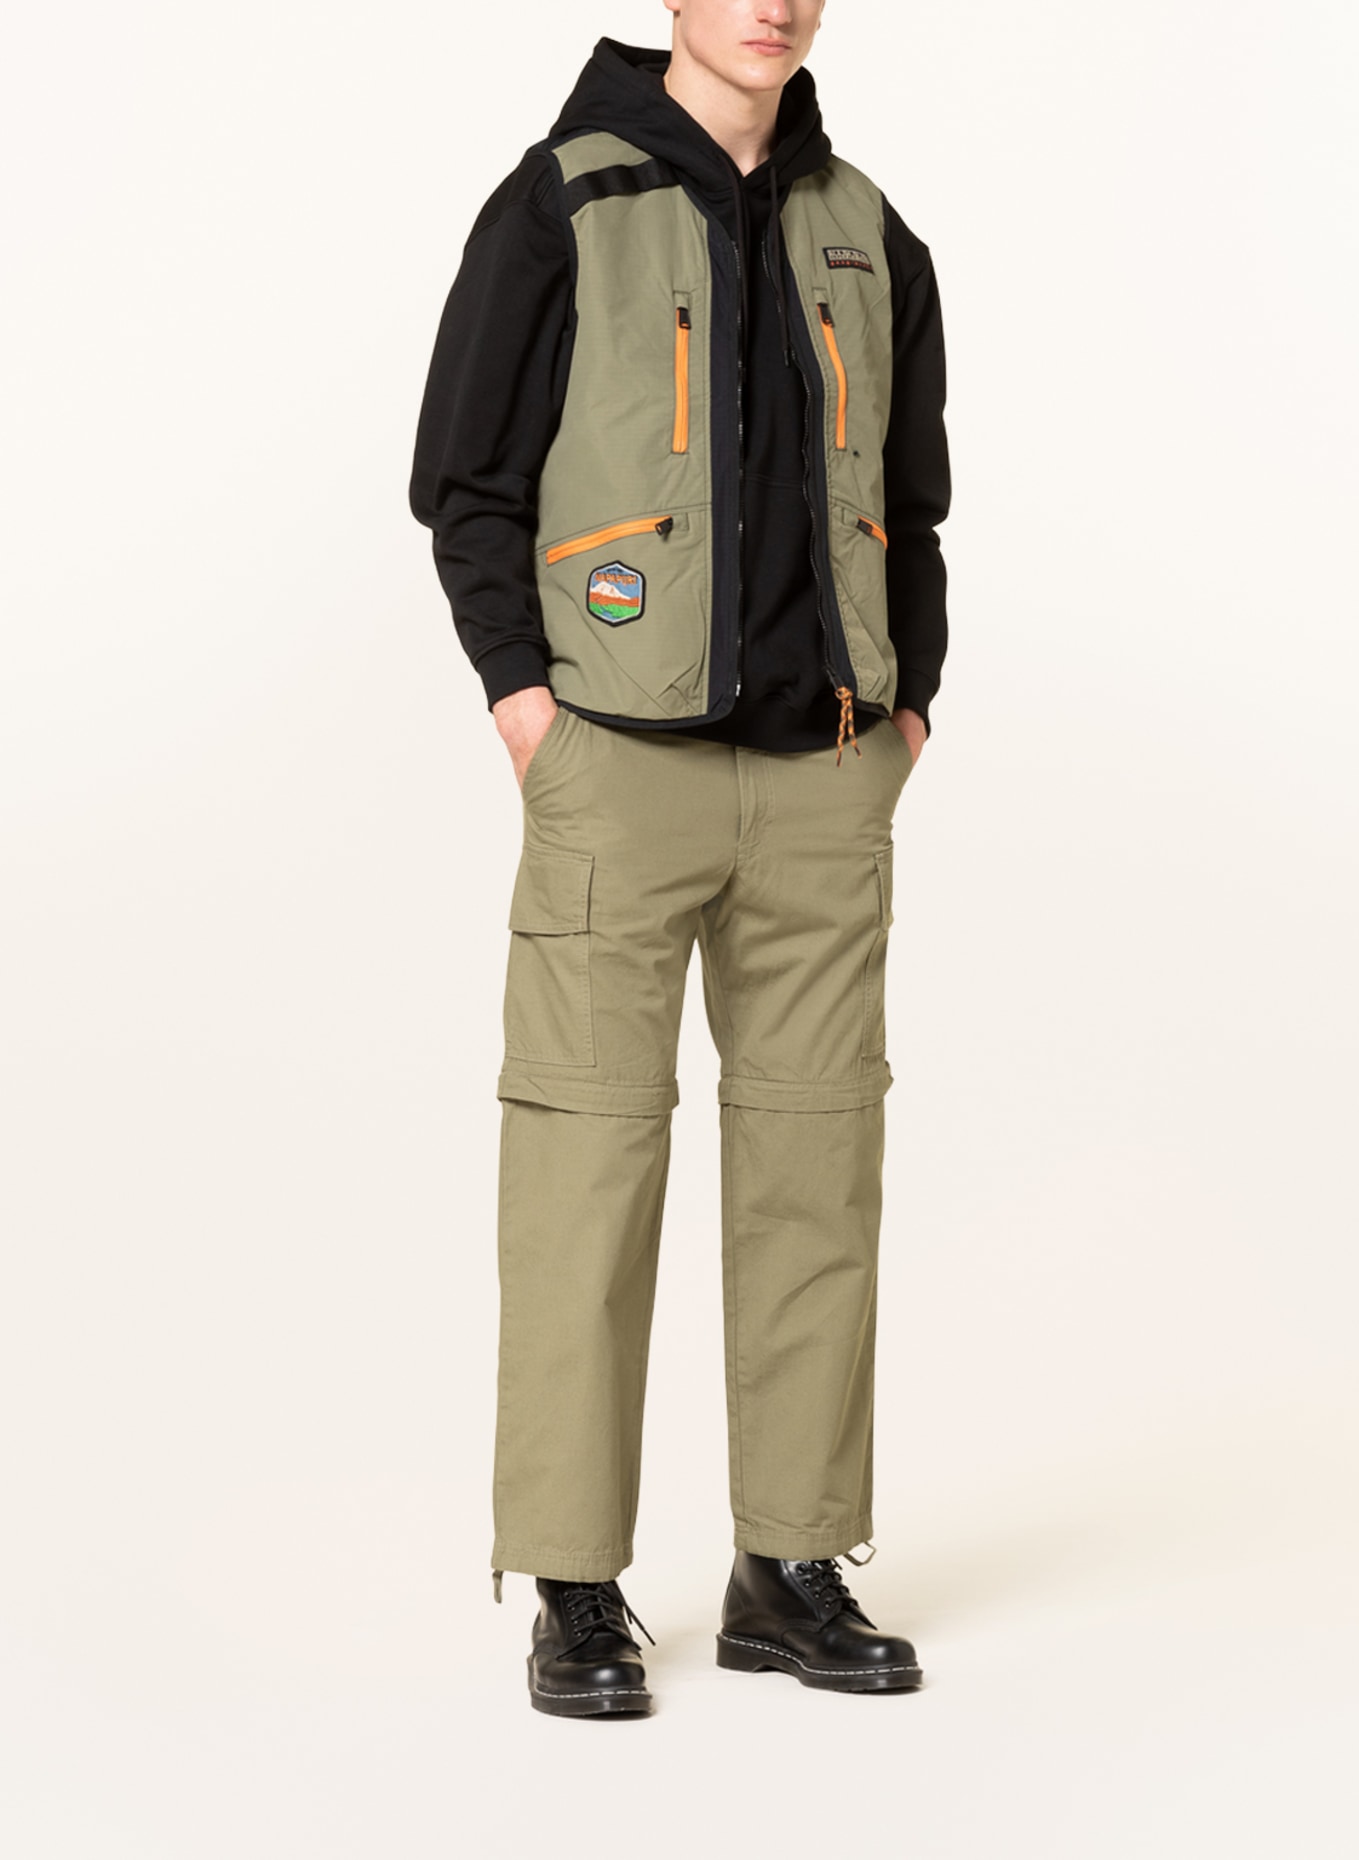 FANNYC Men's Lightweight Convertible Pants Outdoor Recreation Hiking Pants  Tactical Cargo Pants Zip Off Travel Safari Pants Quick Dry Trousers,S-3XL -  Walmart.com